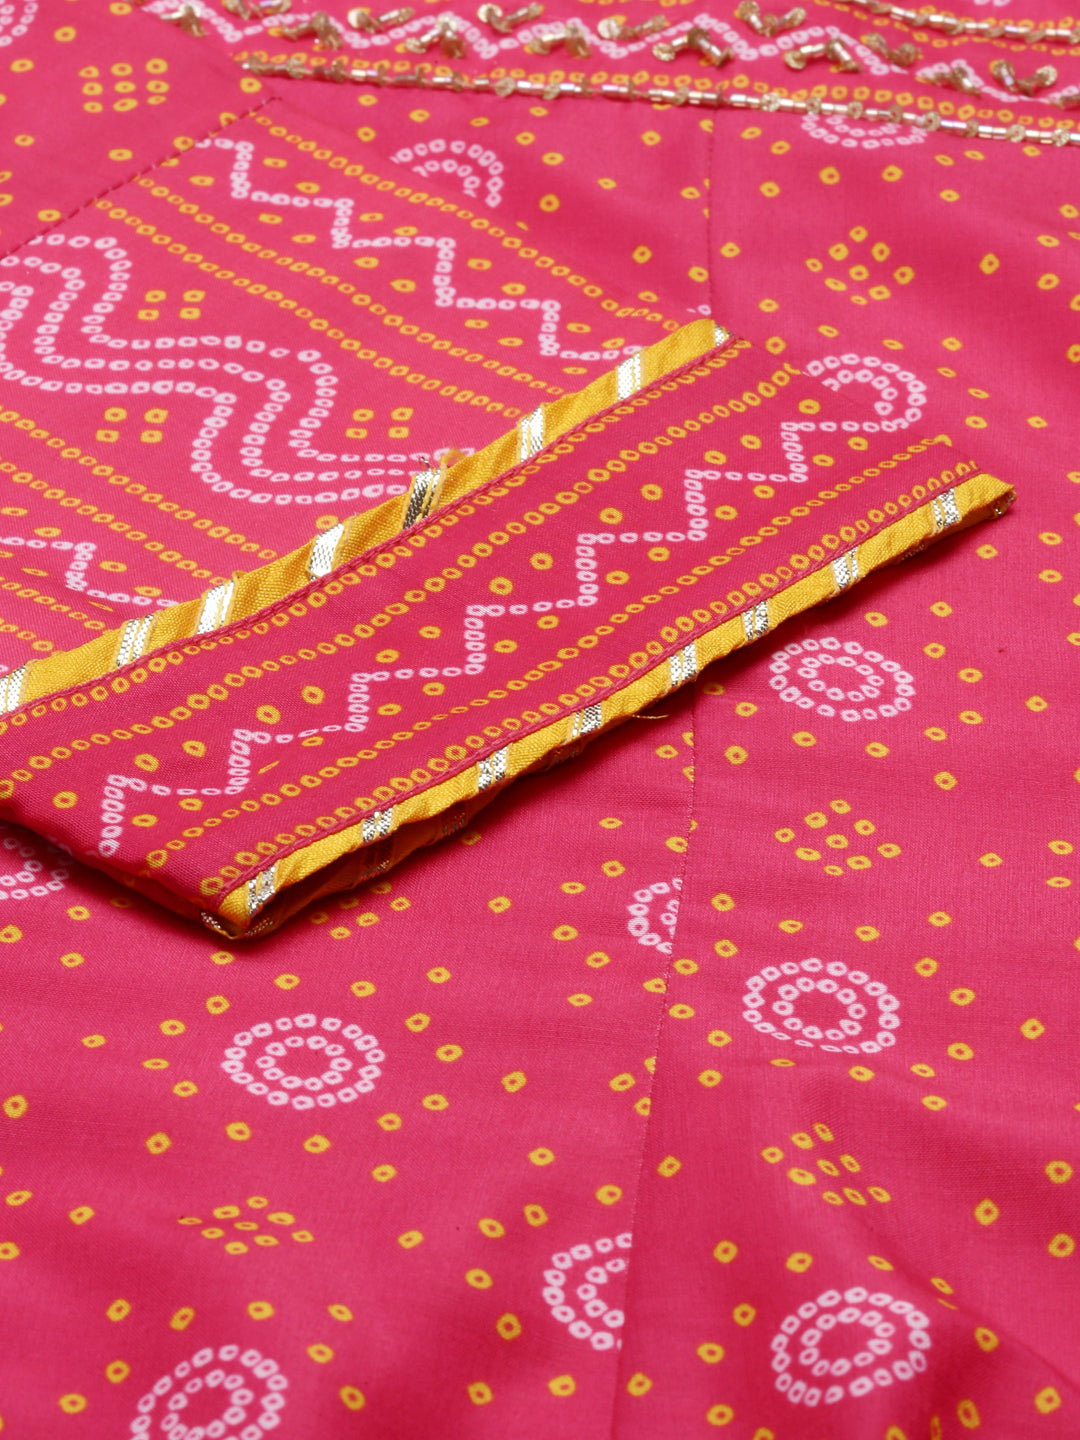 Neeru'S Pink Color, Muslin Fabric Tunic